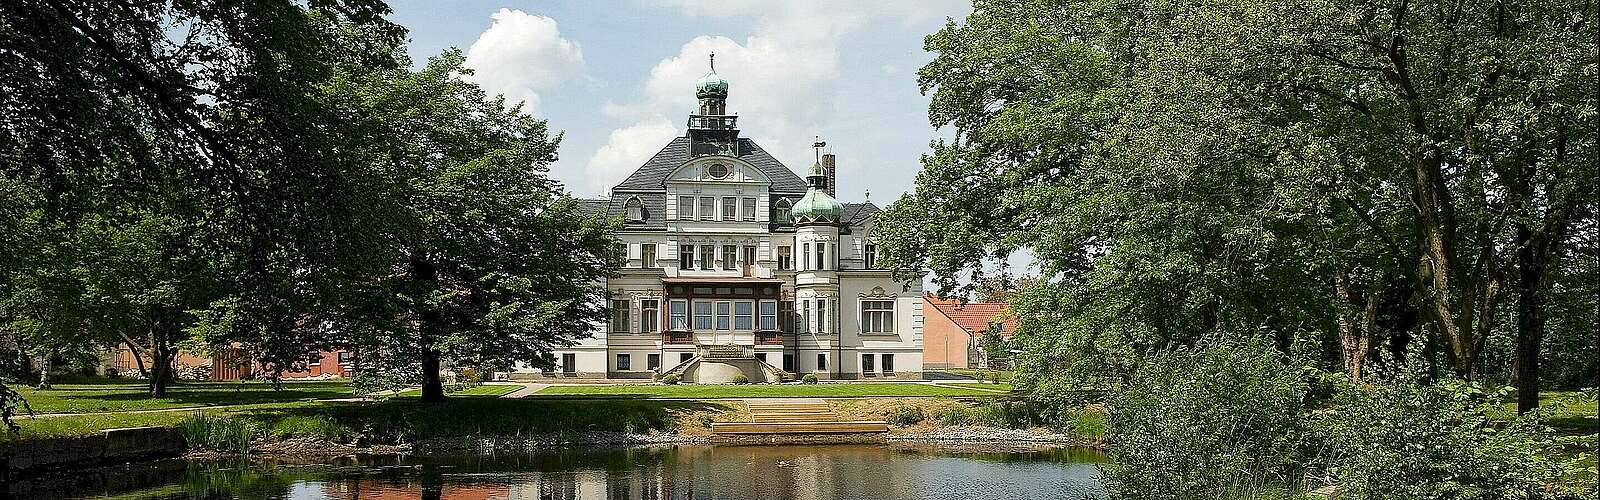 Schloss Uebigau,
        
    

        Foto: Fotograf / Lizenz - Media Import/Erik-Jan Ouwerkerk